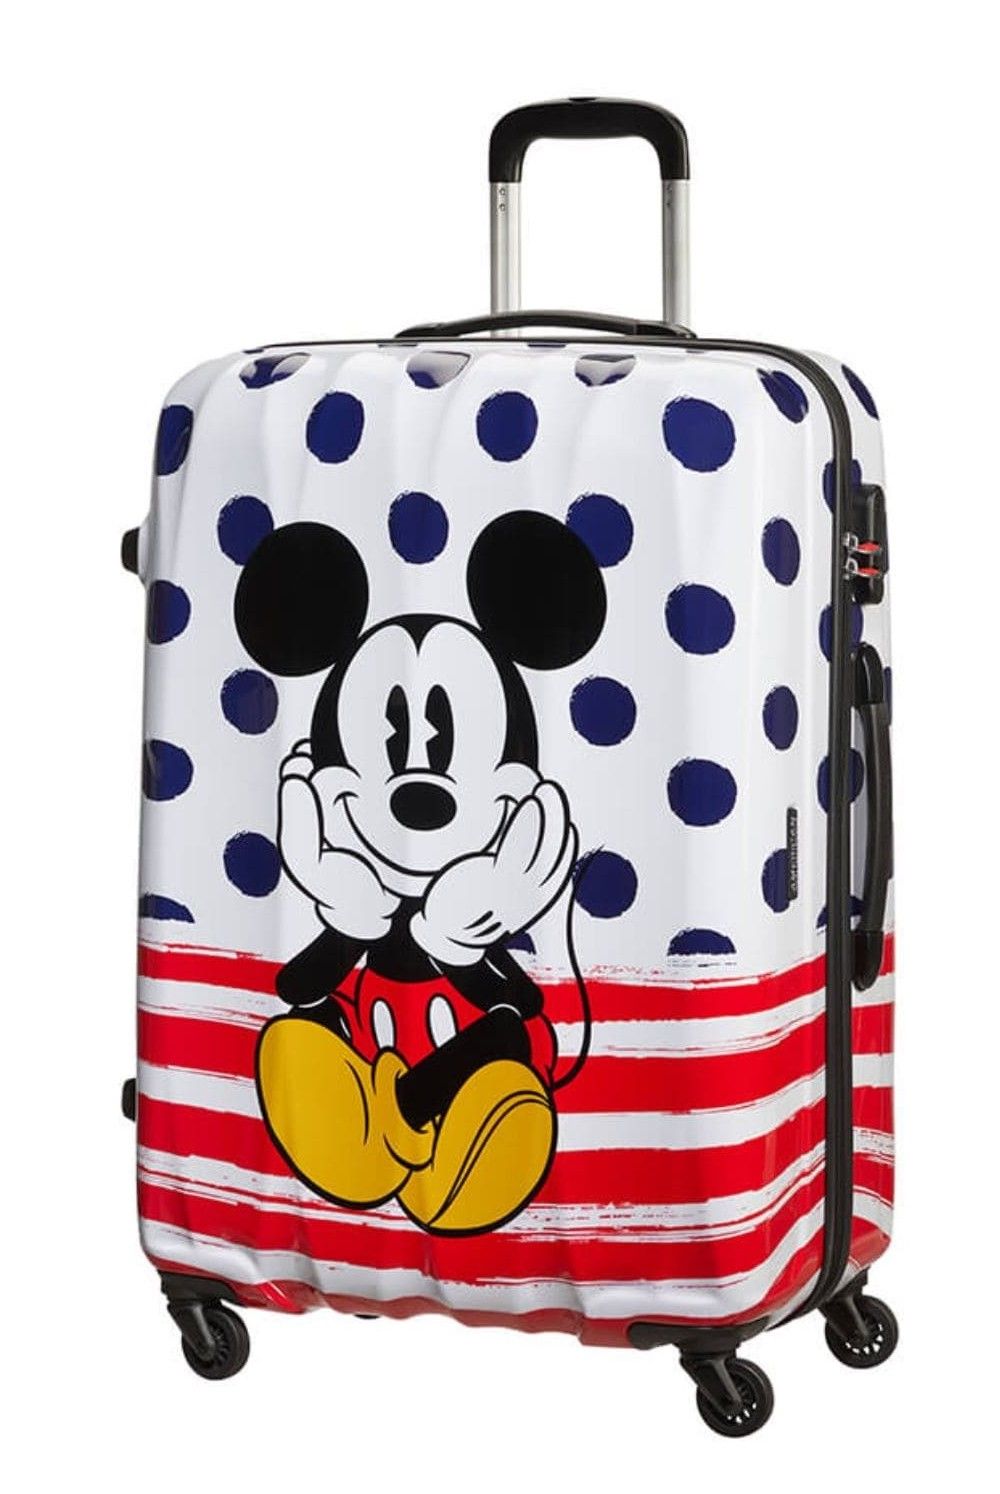 AT valise d'enfants Mickey Blue Dots 75 cm 88 litres